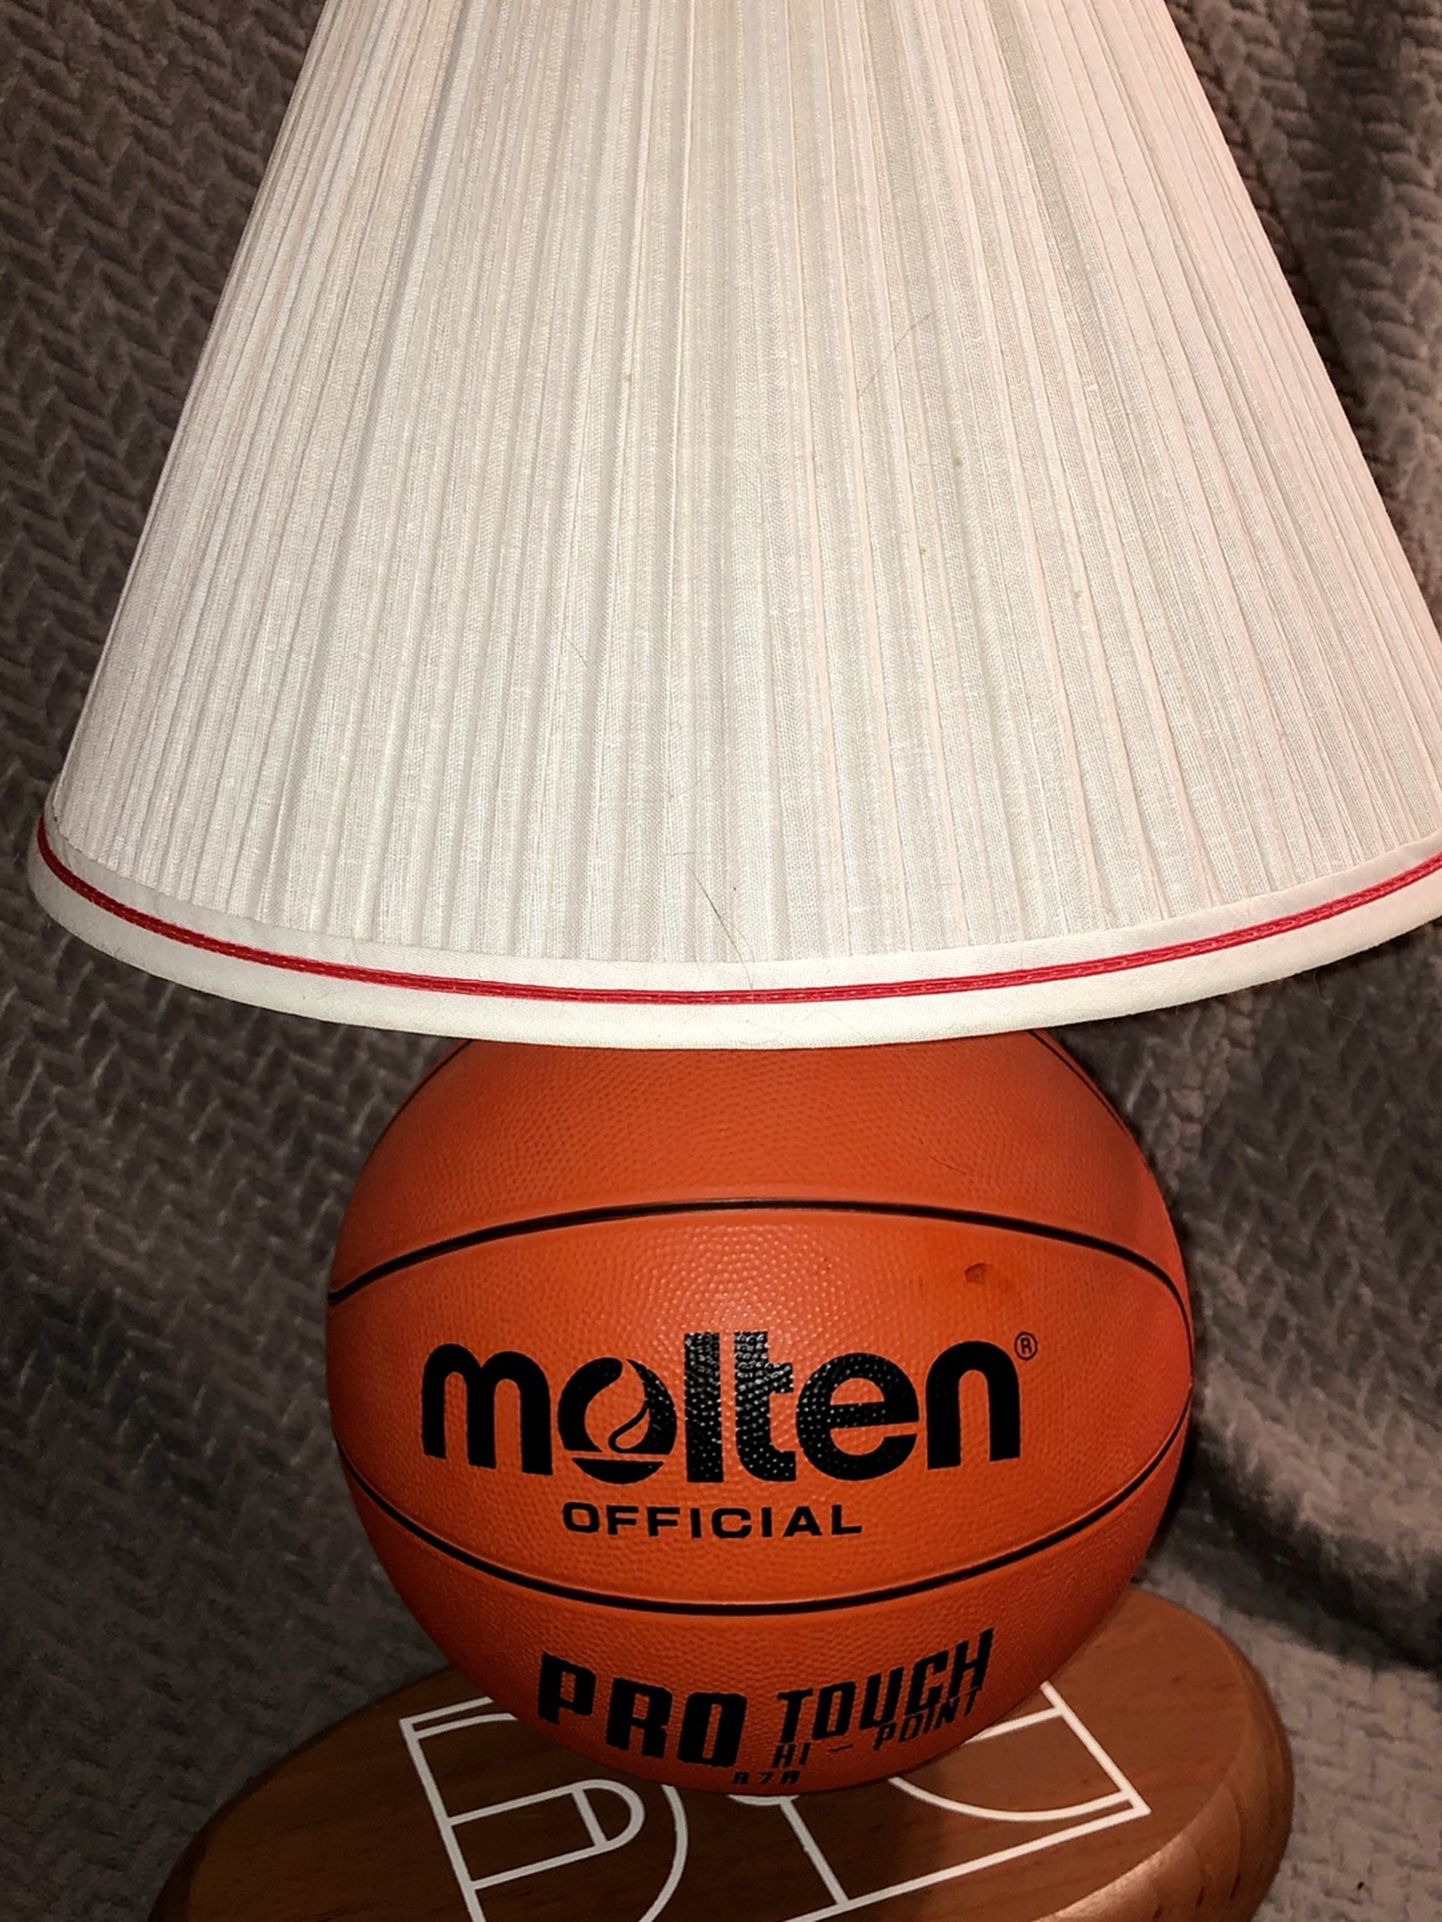 Super unique basketball lamp - REAL Basketball!